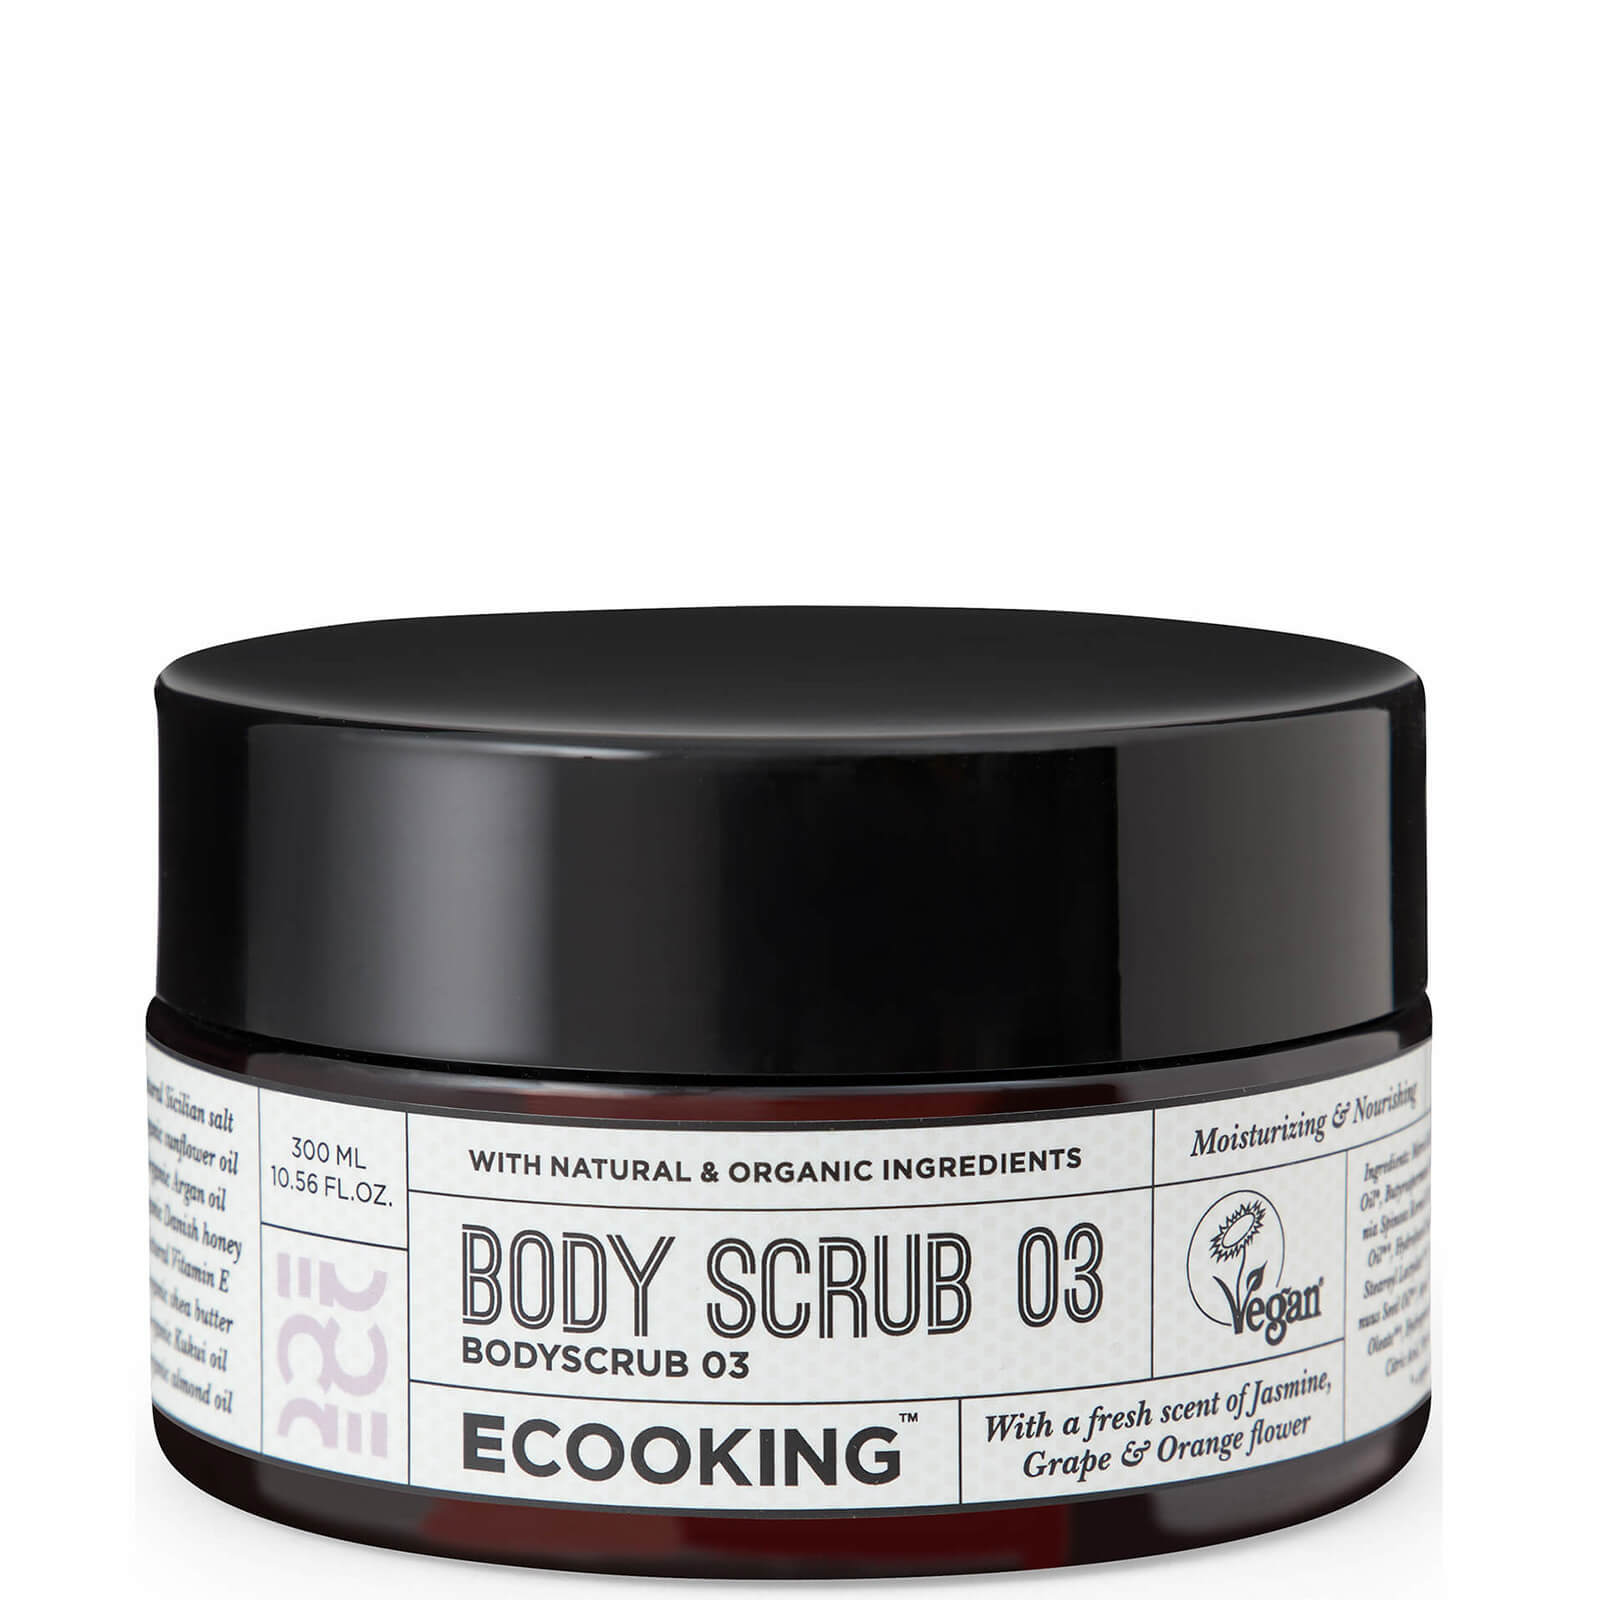 Ecooking Body Scrub 03 300ml